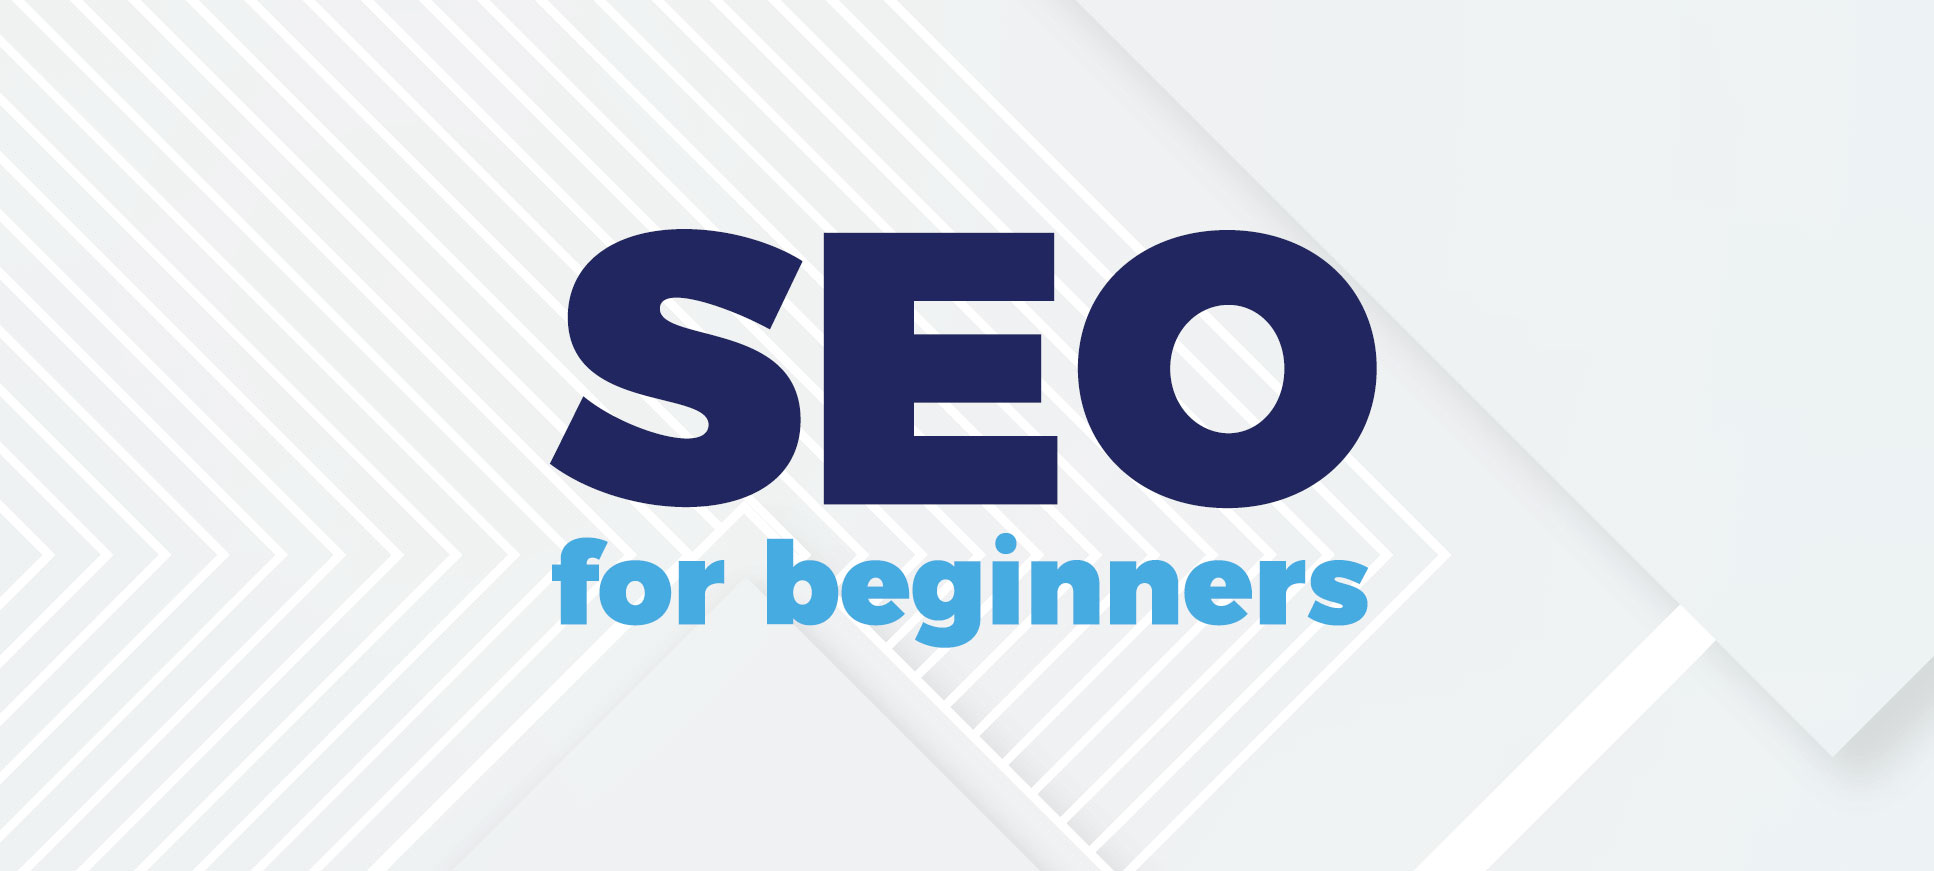 Seo for beginners